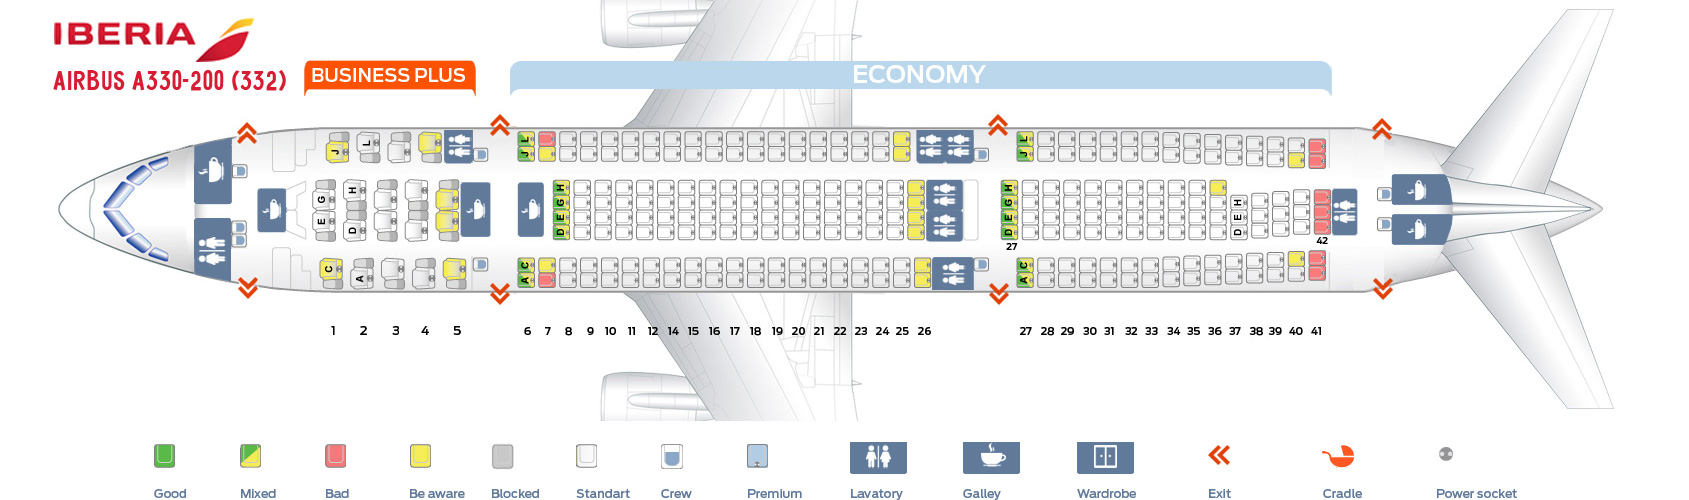 Iberia Airbus A330 Seating Chart